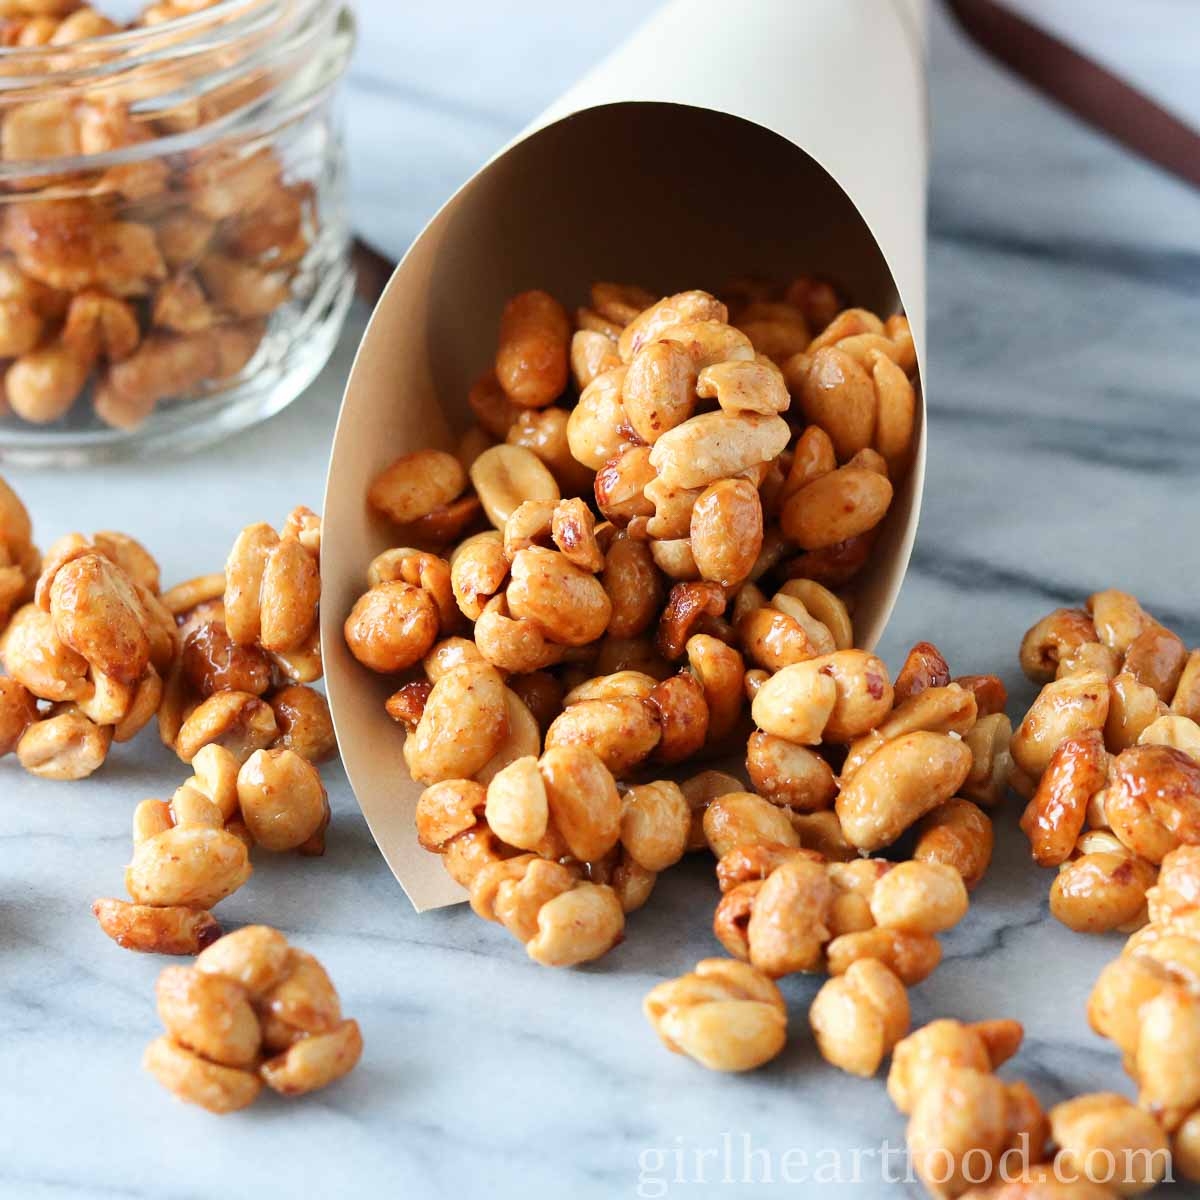 https://girlheartfood.com/wp-content/uploads/2020/07/Honey-Roasted-Peanut-Clusters-Recipe.jpg